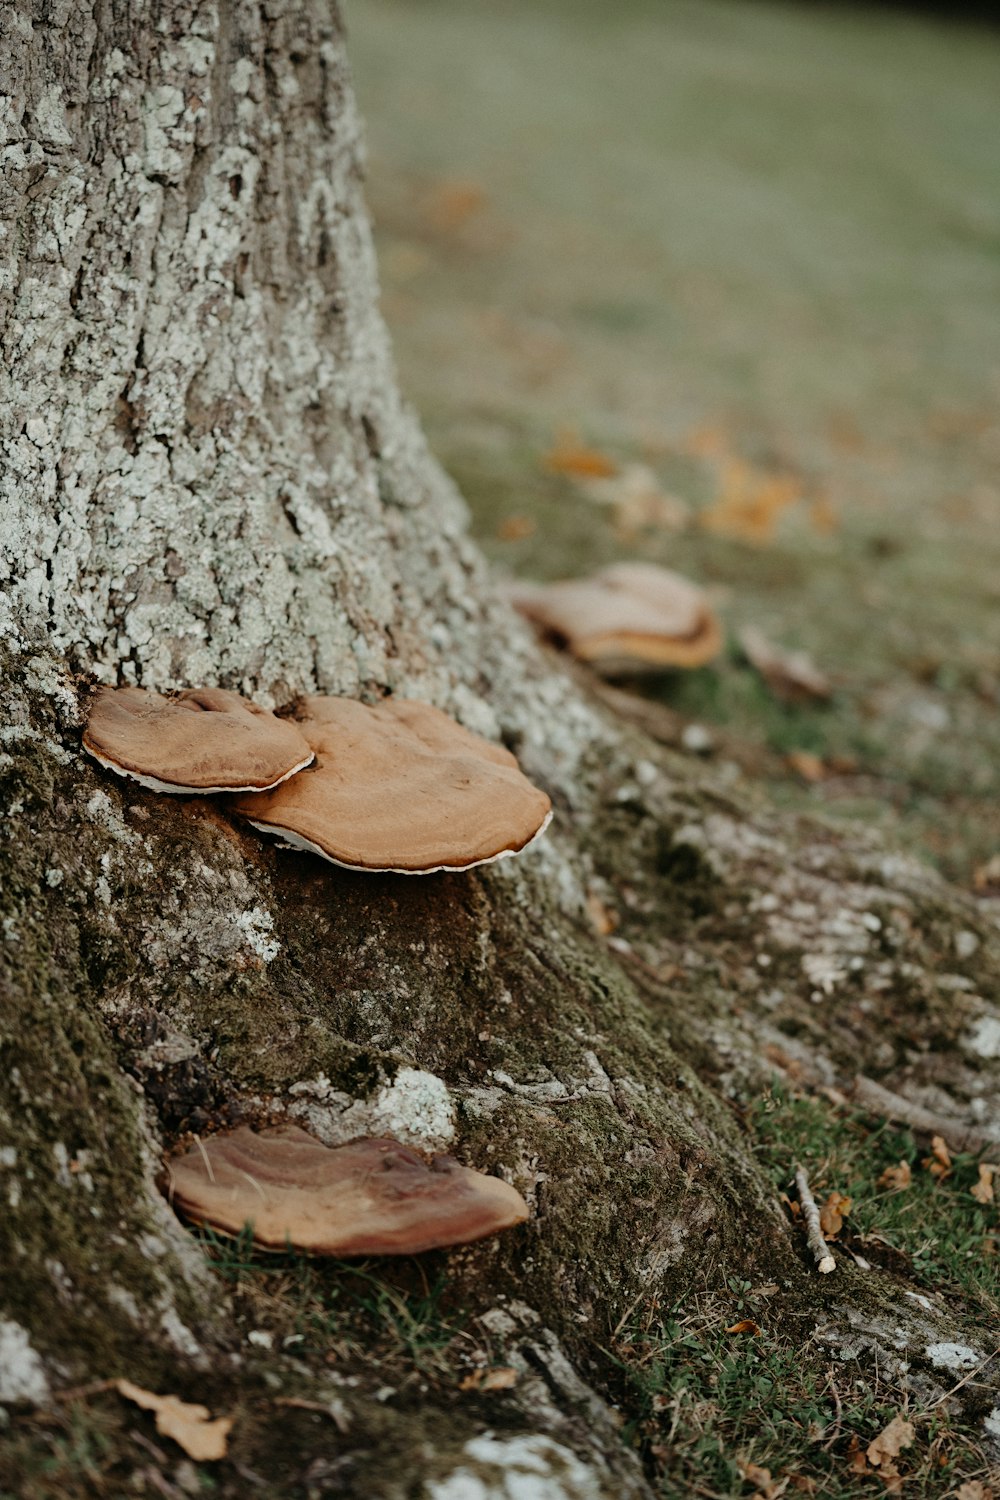 mushrooms growing on the bark of a tree